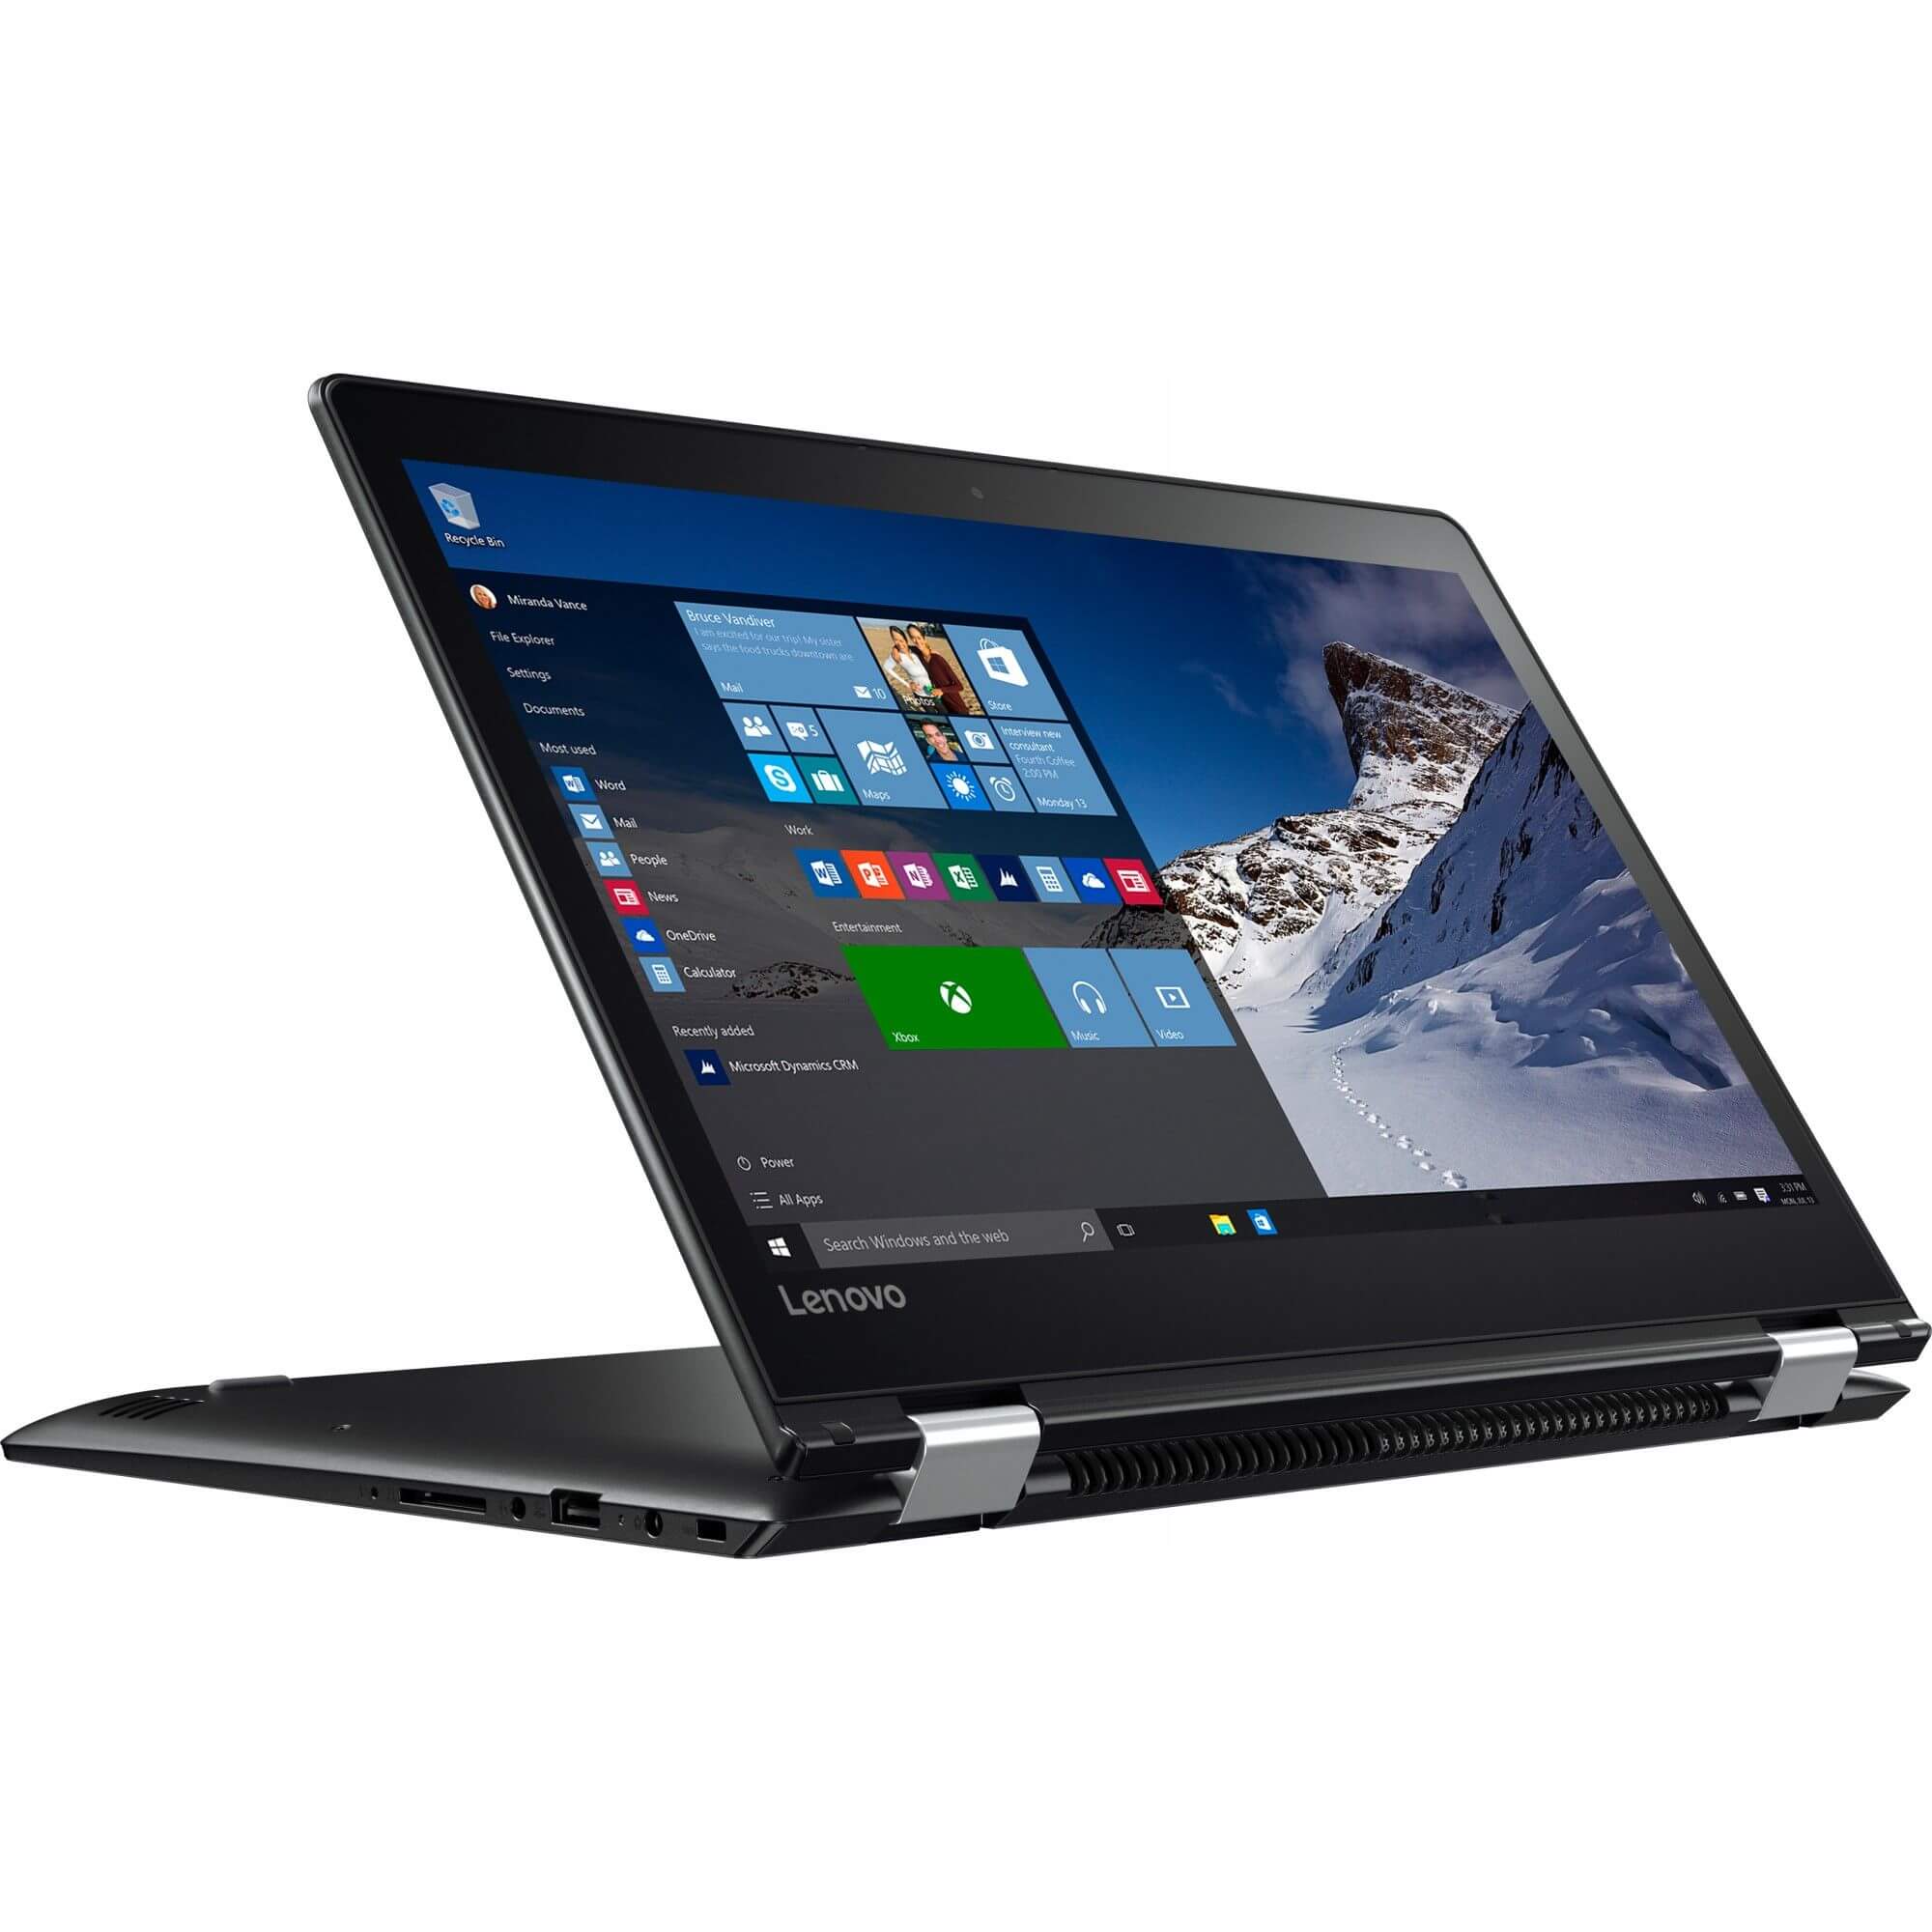  Laptop 2 in 1 Lenovo Yoga 510-15IKB, Intel Core i5-7200U, 8GB DDR4, SSD 256GB, Radeon R7 M460, Windows 10 